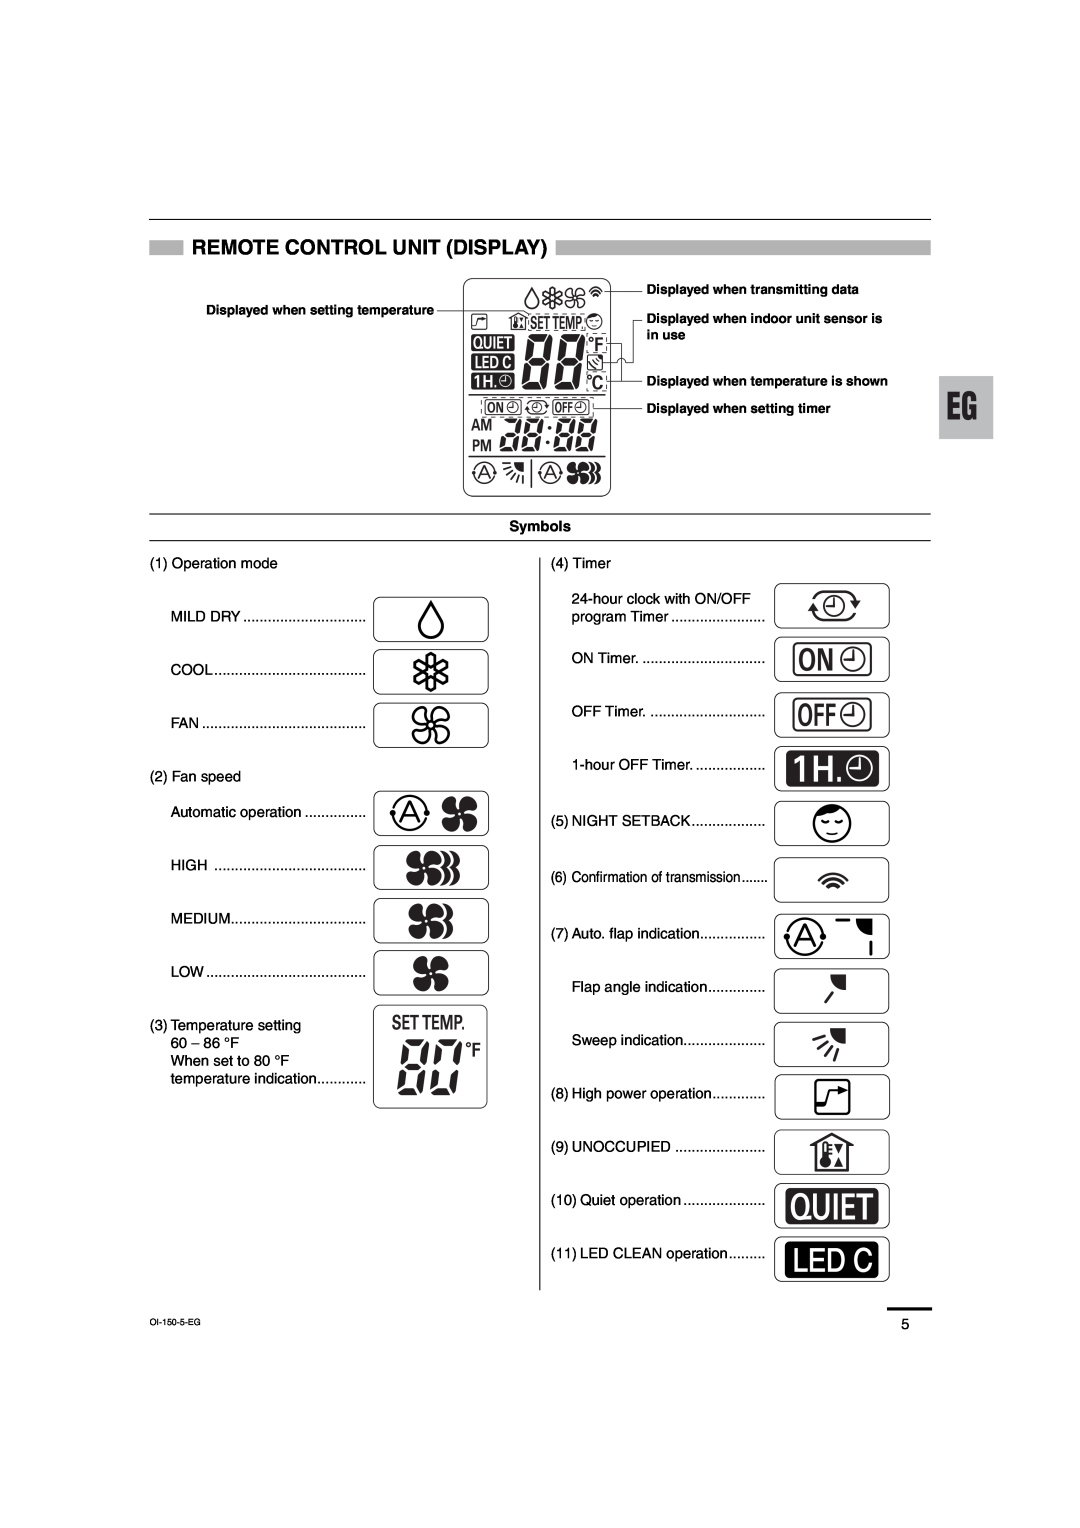 Sanyo C3682, C3082 service manual Remote Control Unit Display, Symbols 